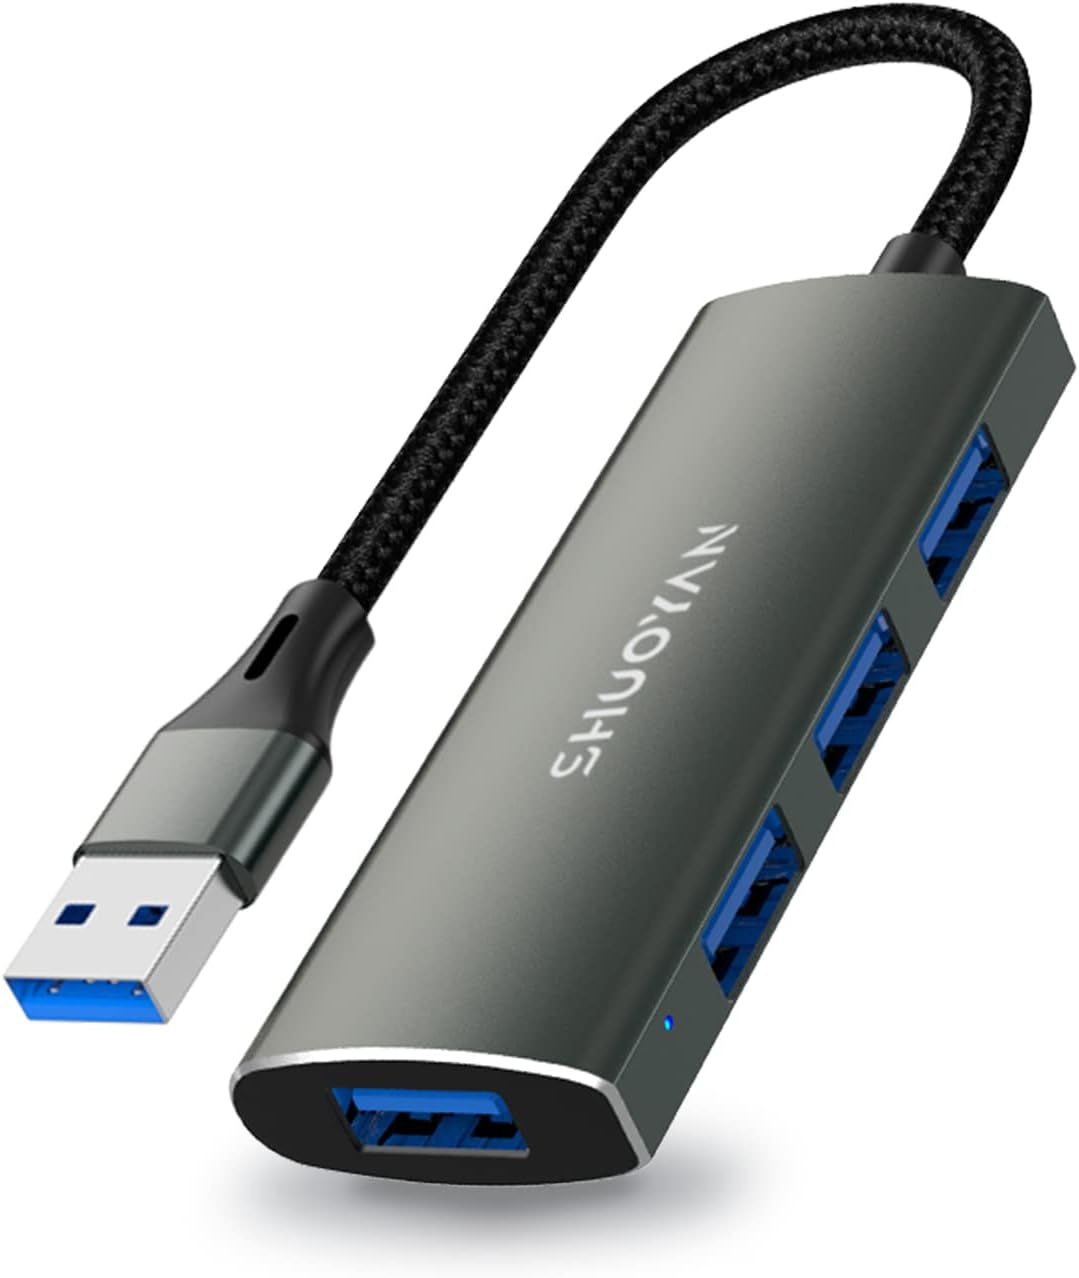 Ultra-Slim 4-Port USB 3.0 Hub - USB Splitter for Laptop, Desktop, Flash Drive, Printer, Keyboard, Mouse Adapter, Camera, and More